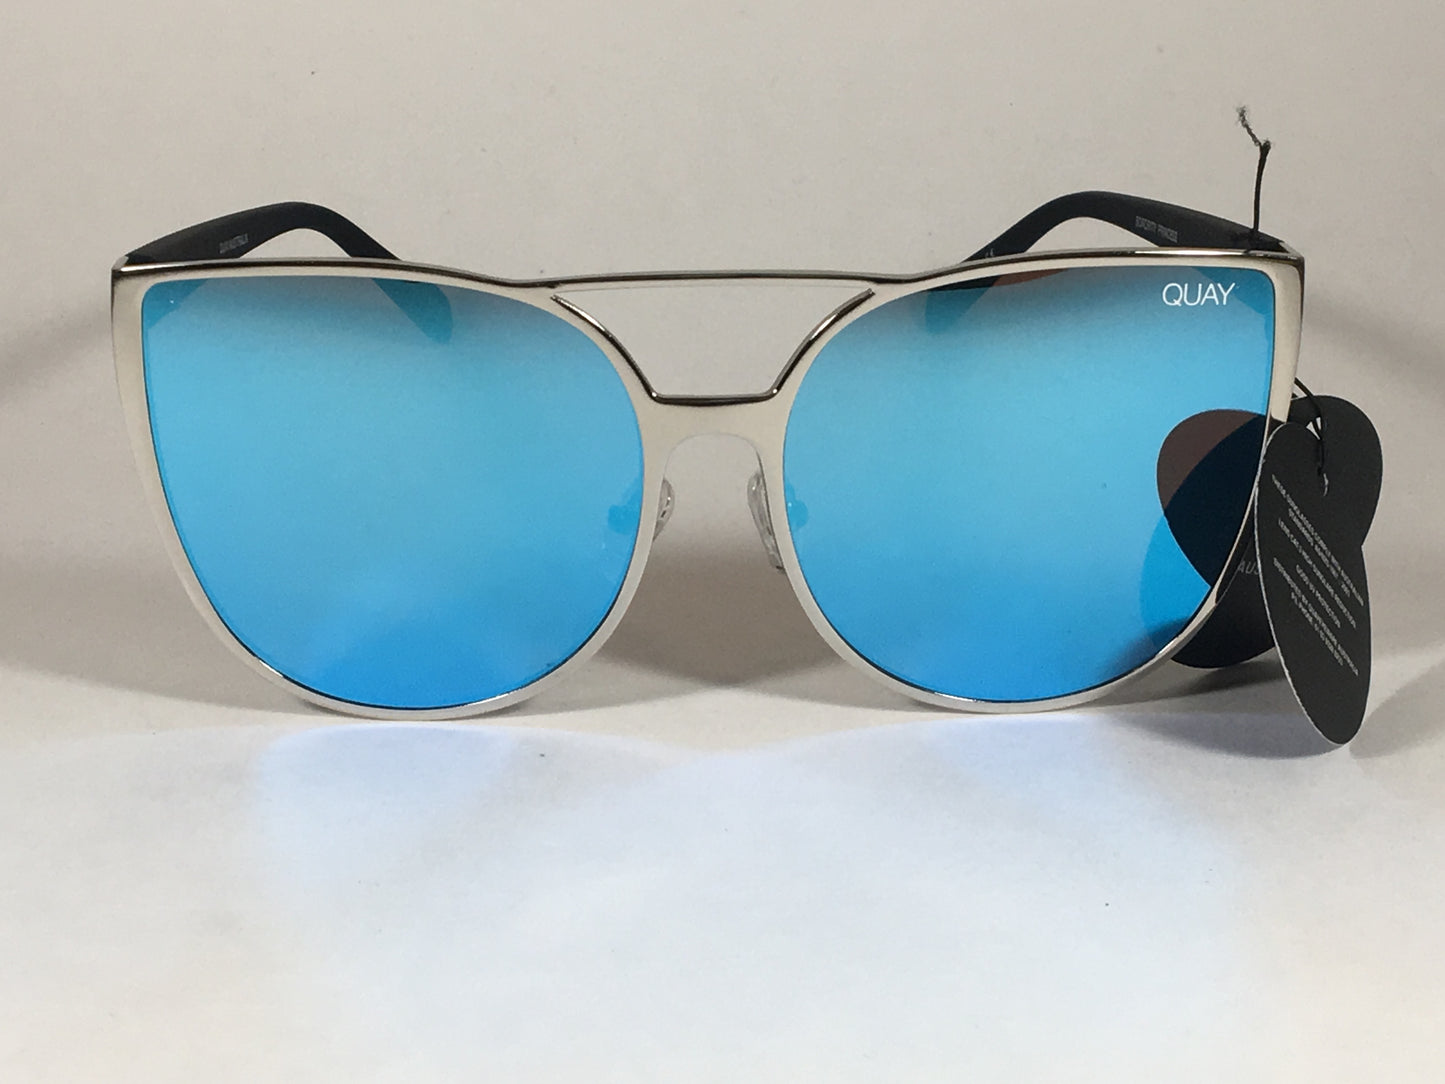 Quay Sorority Princess Sunglasses Large Cat Eye Silver Metal Blue Mirror Lens Qw000162 Slv Blue - Sunglasses